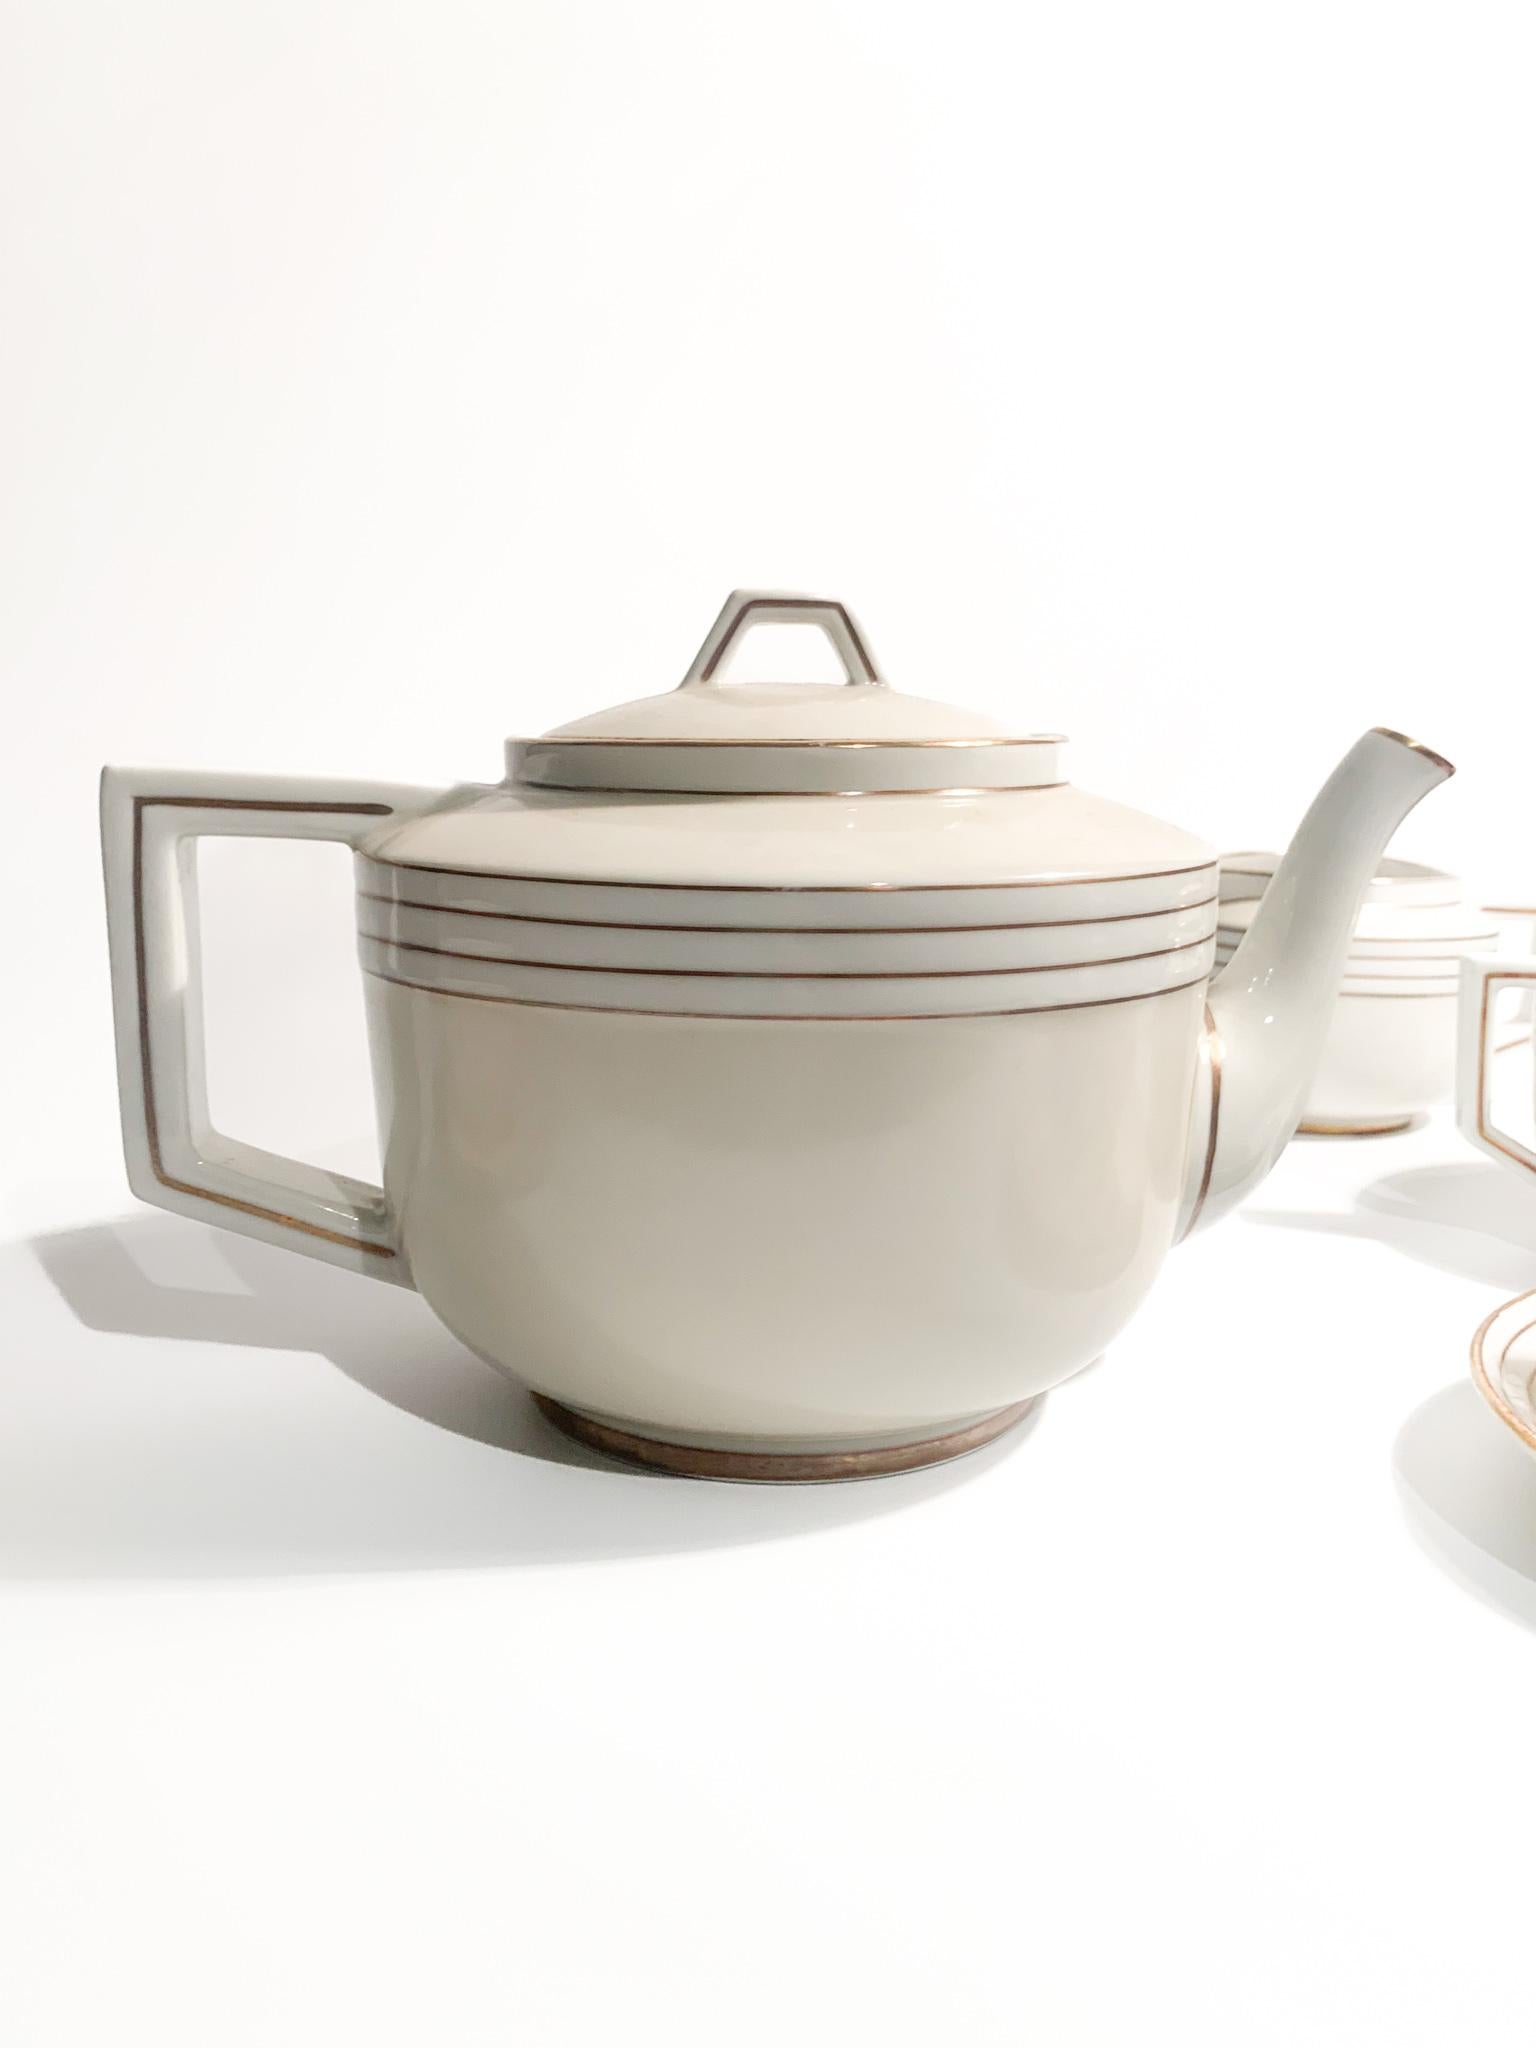 Twelve Richard Ginori Decò Tea Set in Porcelain from the 1940s 2